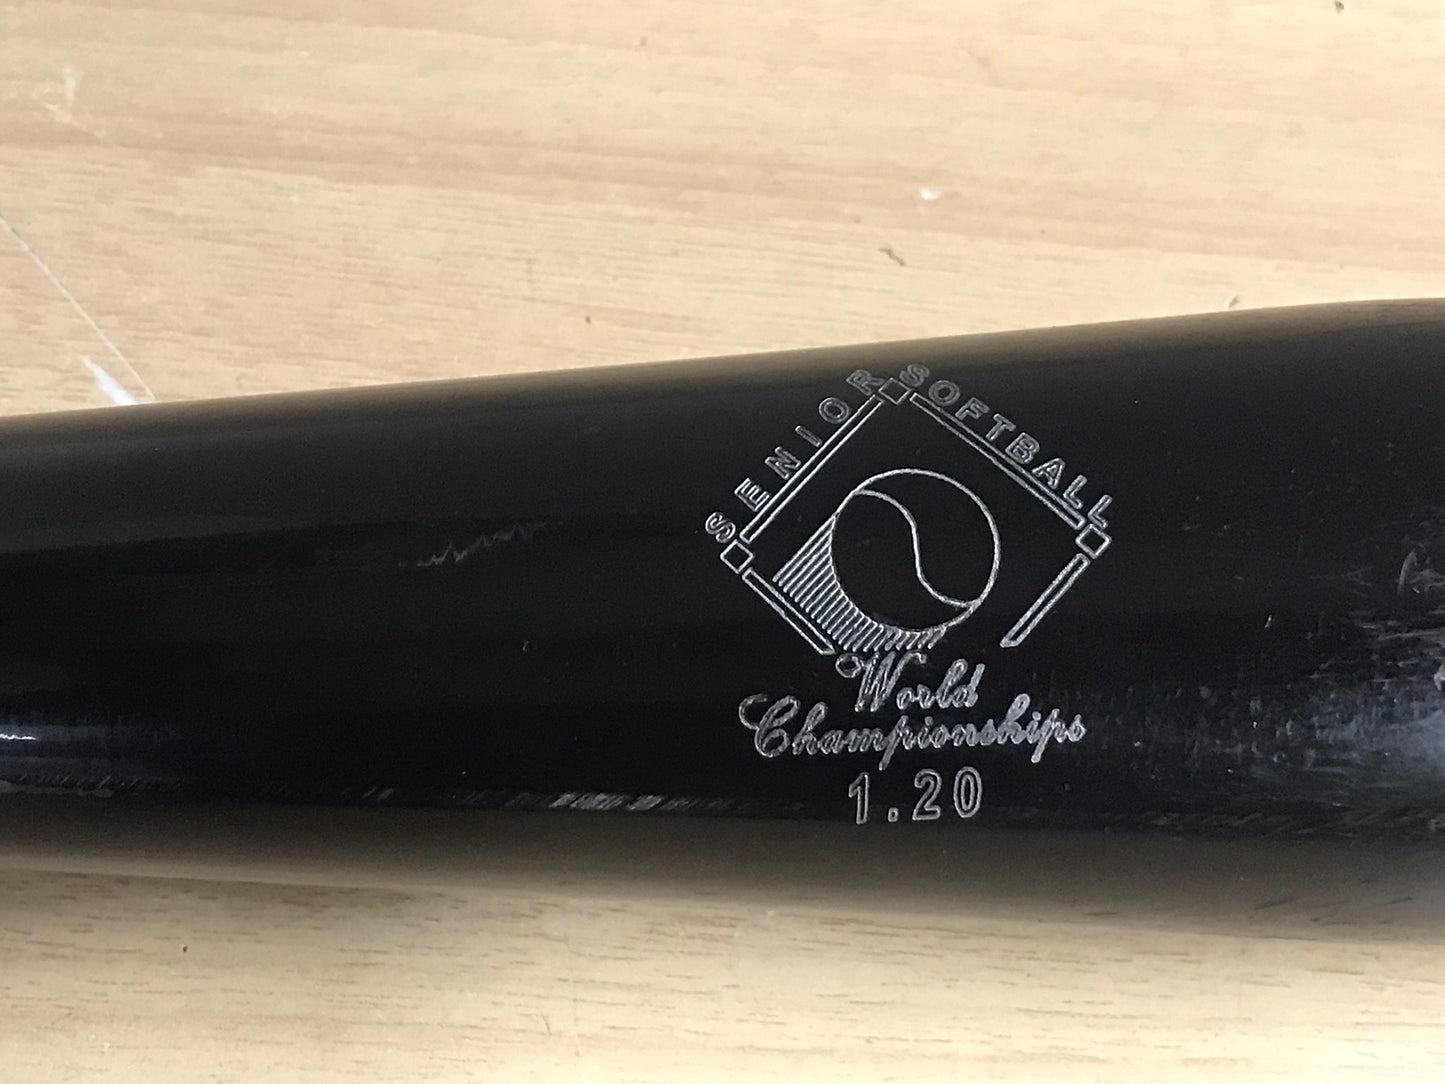 Baseball Bat 34 inch 29 oz Miken World Champion Ultra II 1.2 BPF MSU2 Softball Red Black Outstanding Quality RARE